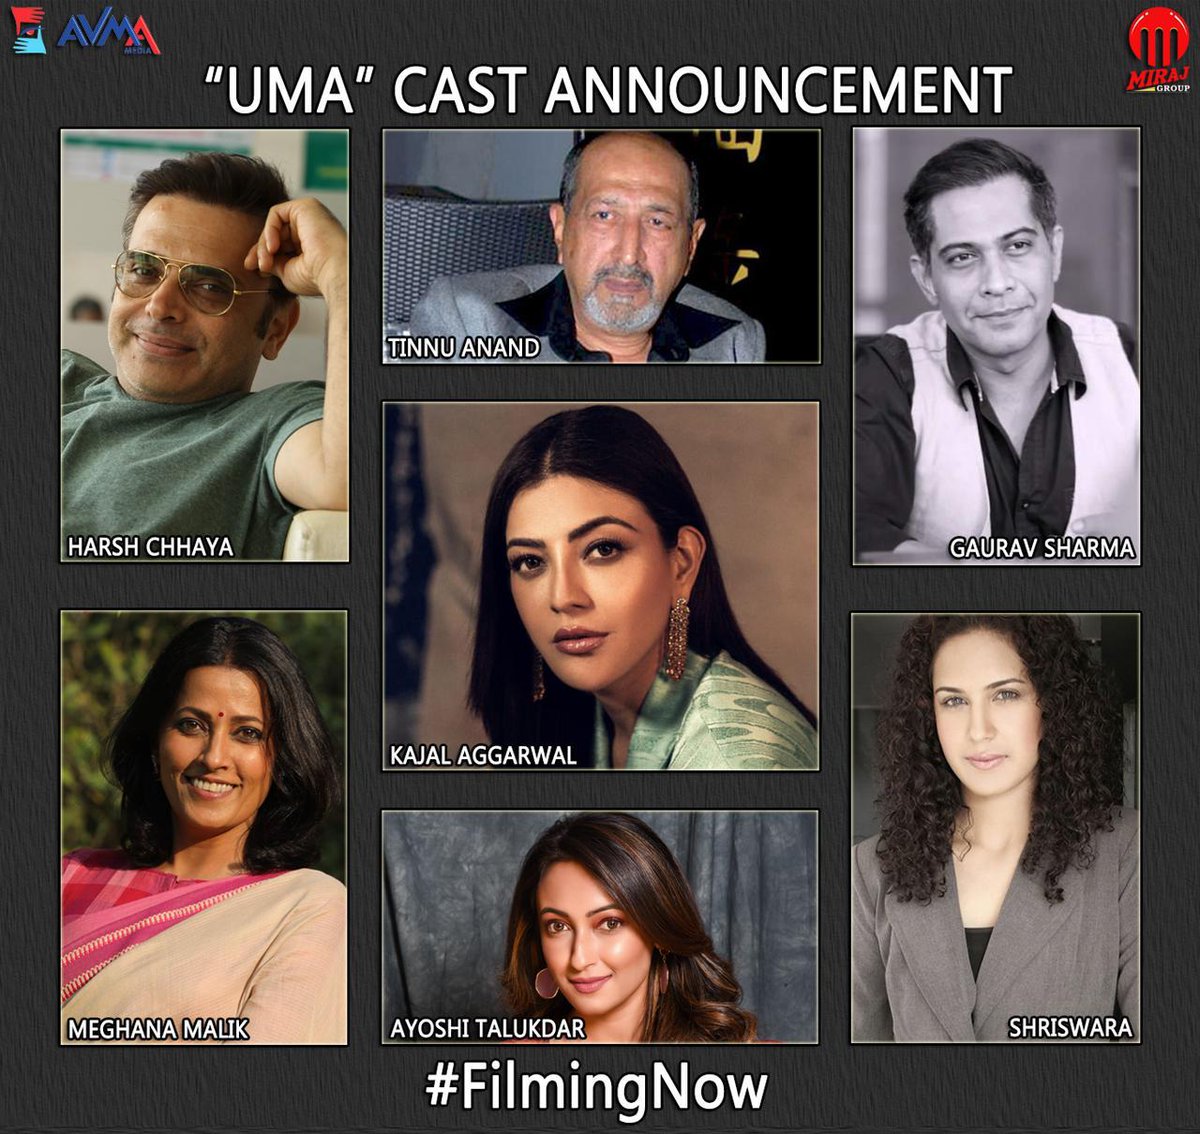 Shoot begins! @MsKajalAggarwal 's “UMA” directed by #Tathagatasingha starts shooting in Kolkata today. The film produced by @G_Avishek (AVMA Media) & @Mantraraj27 (Miraj Creations), also stars #TinnuAnand, #HarshChhaya, @meghna1malik, and @ayoshitalukdar. #KajalAggarwal